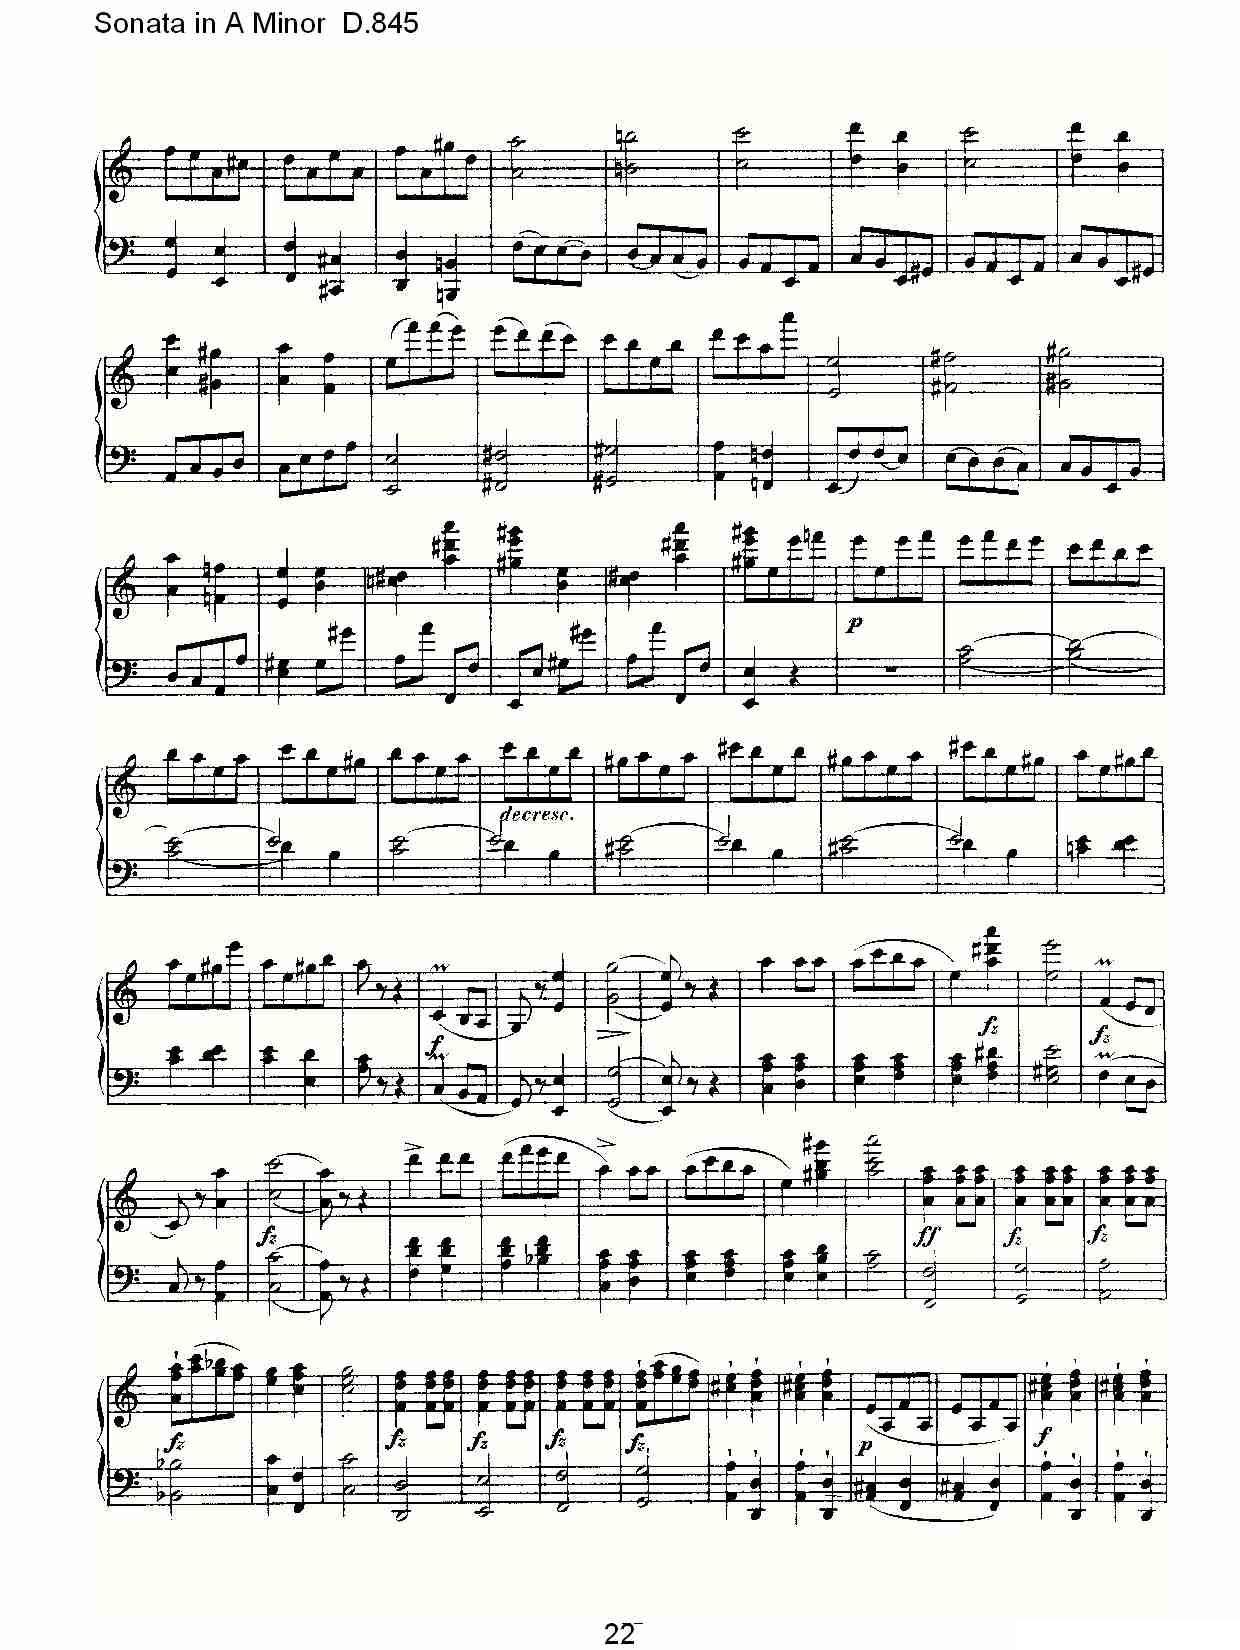 Sonata in A Minor D.845（A小调奏鸣曲 D.845）钢琴曲谱（图22）